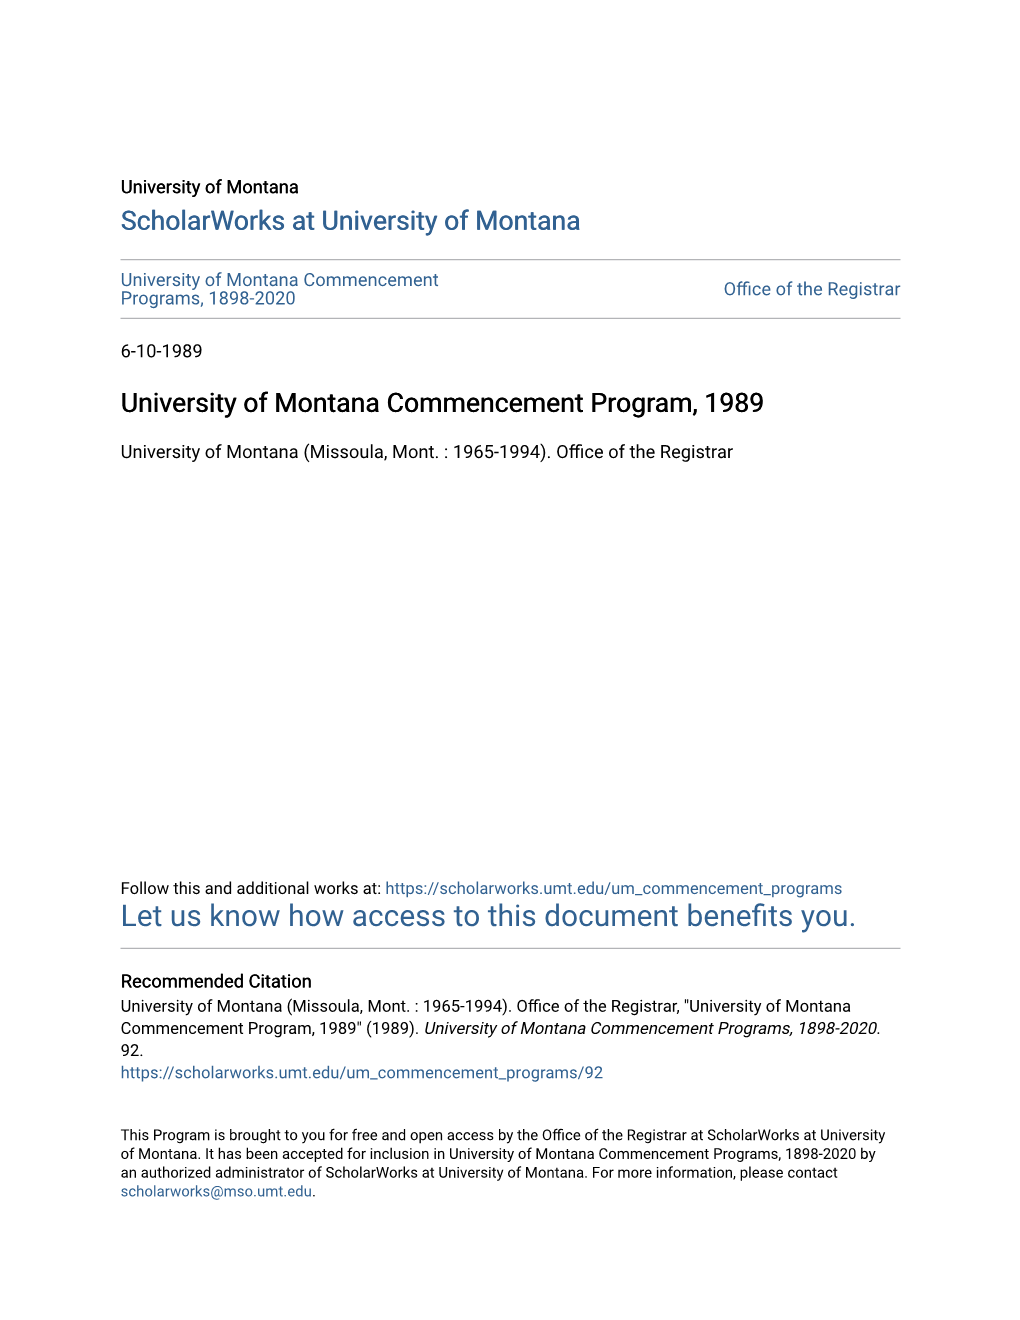 University of Montana Commencement Program, 1989